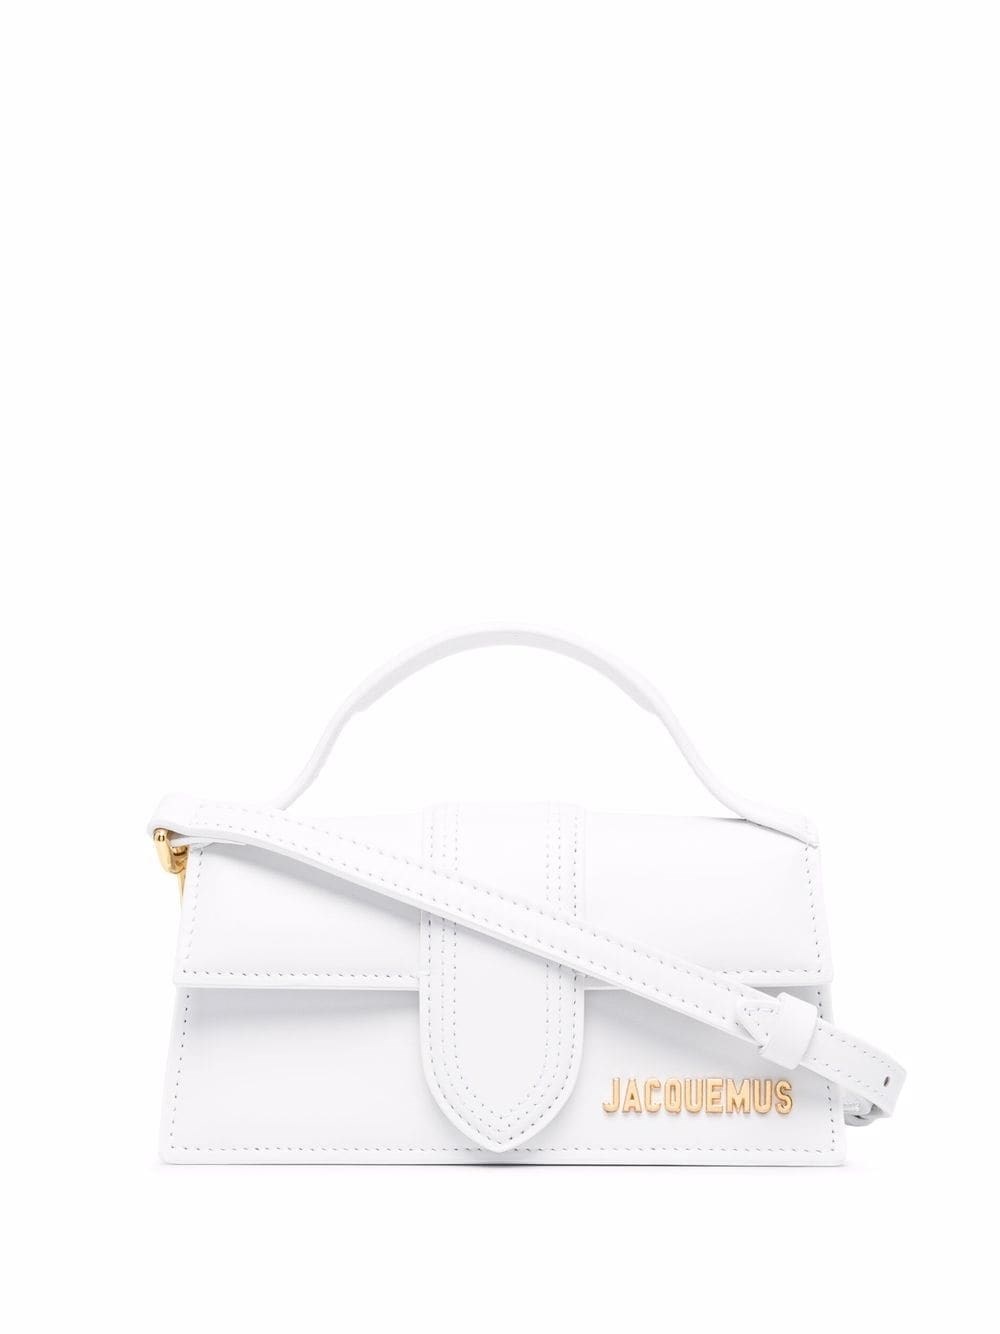 Jacquemus Le Bambino Long Shoulder Bag White